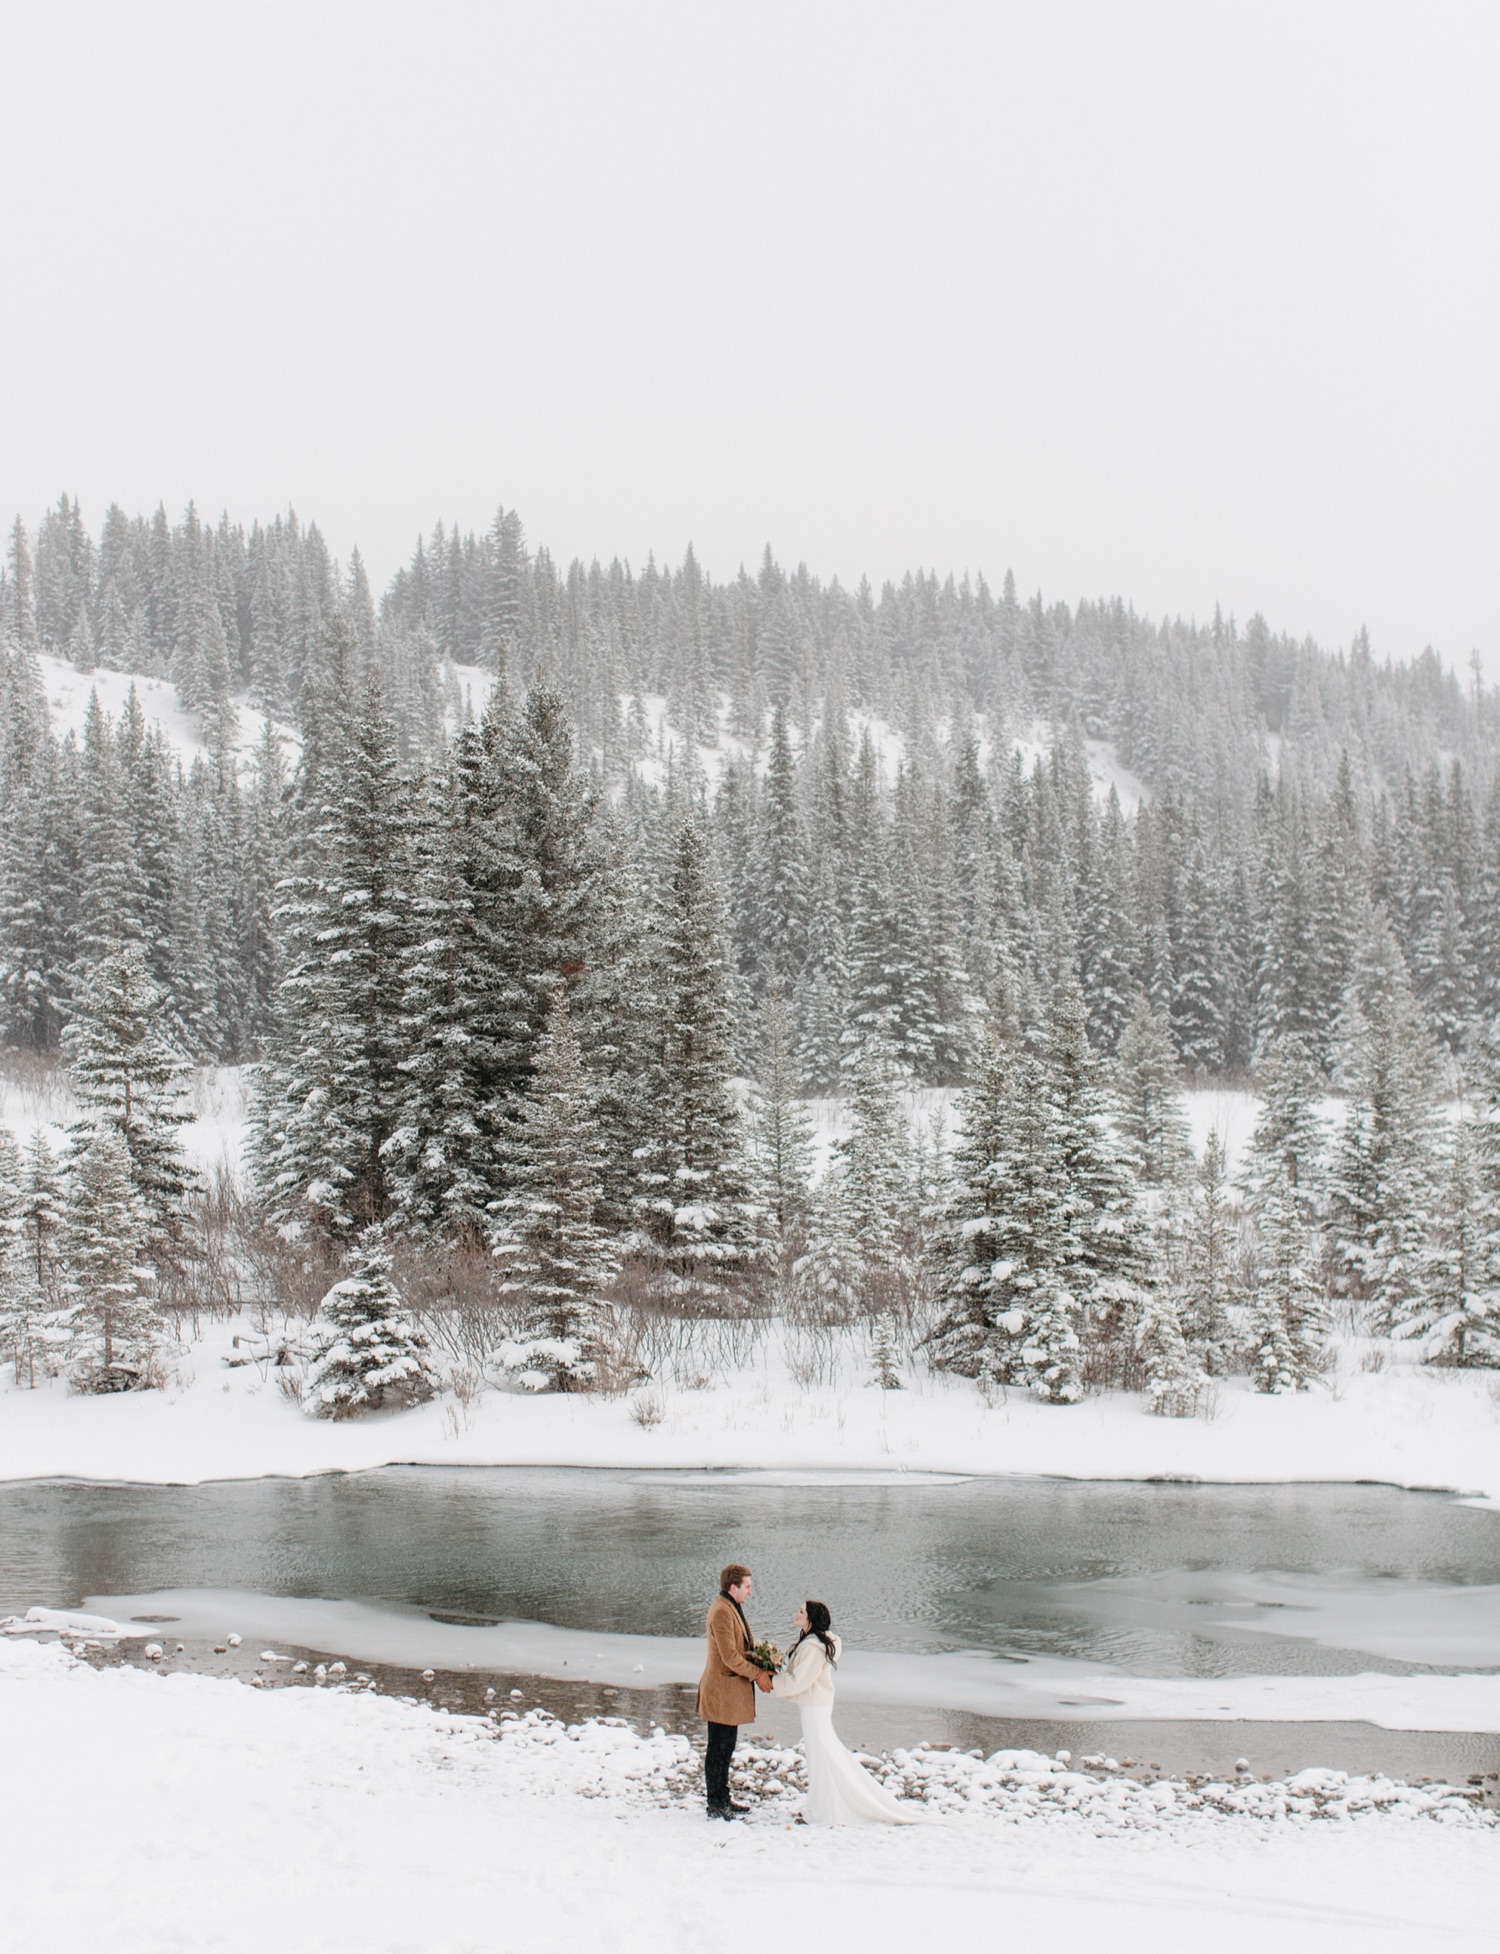 Newly married couple winter wedding portraits in Banff near open water